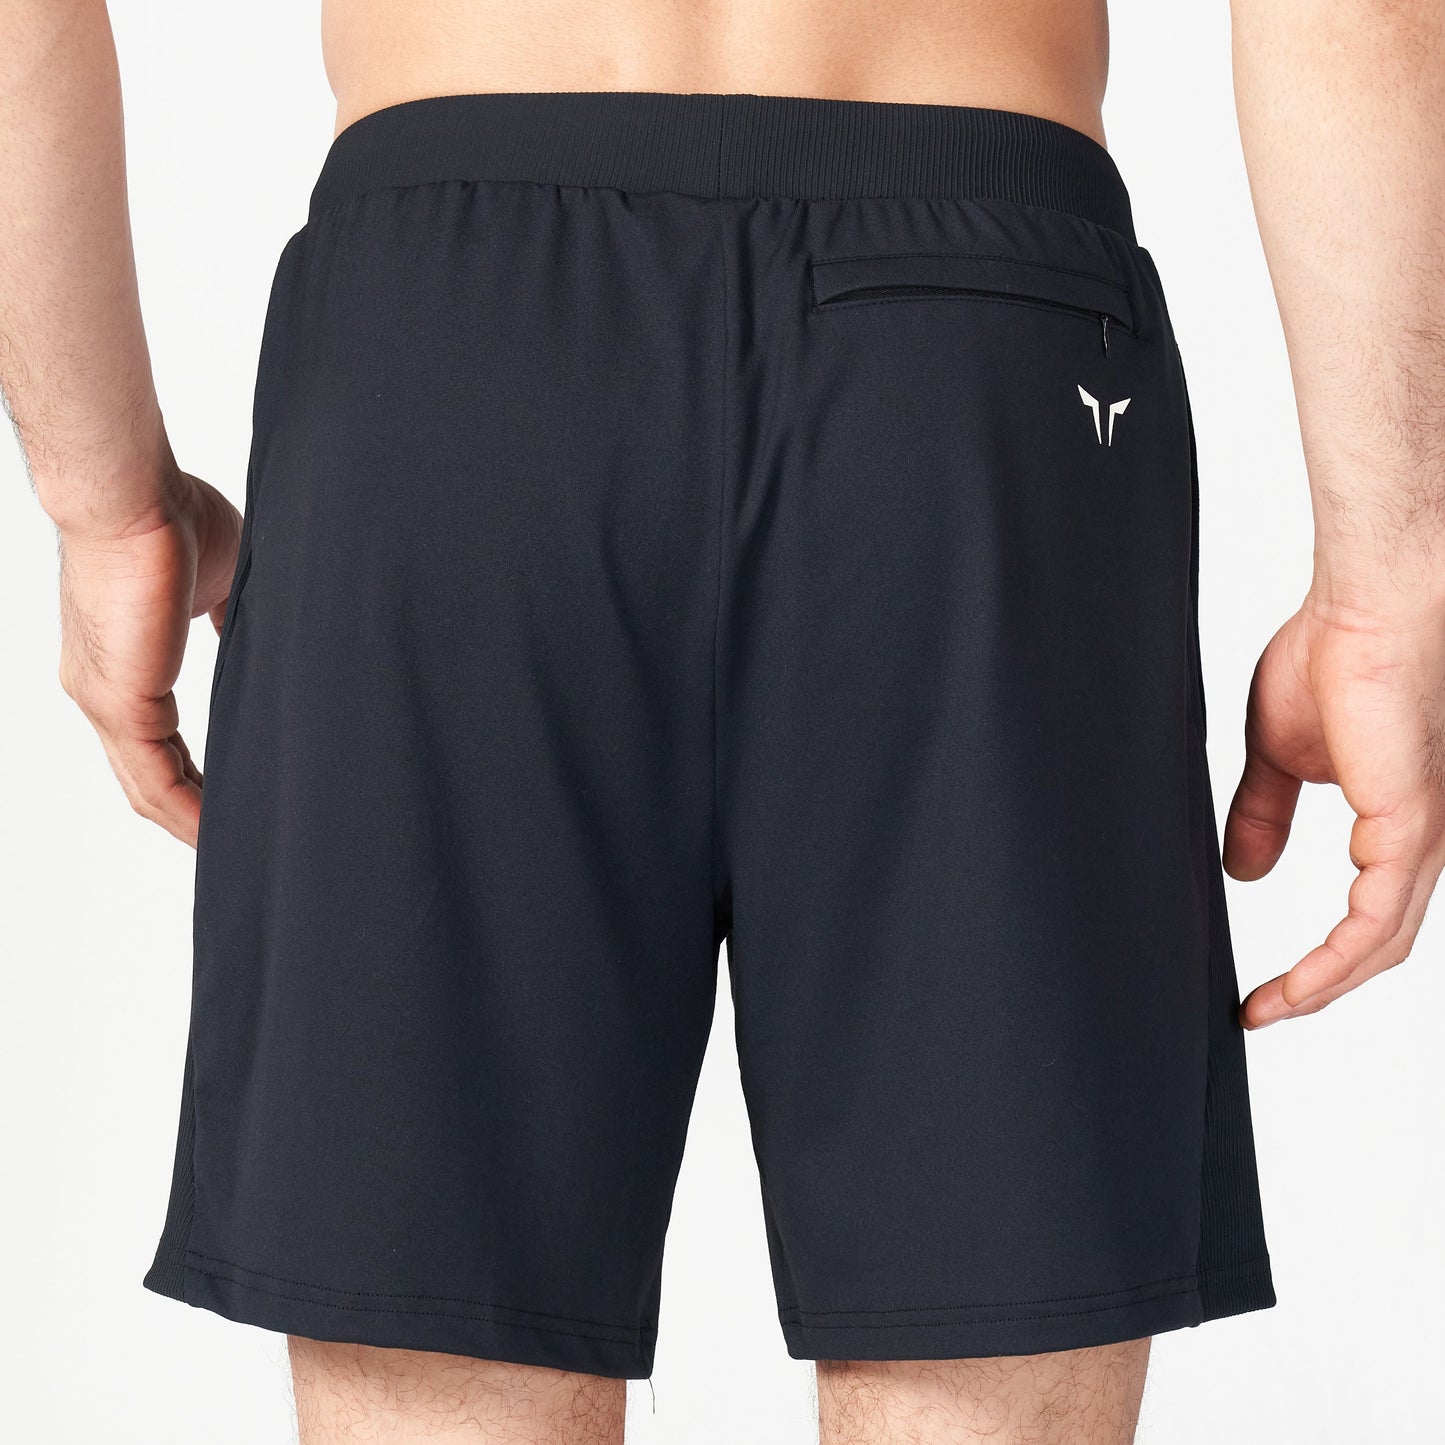 squatwolf-gym-wear-ribbed-flex-shorts-black-workout-short-for-men